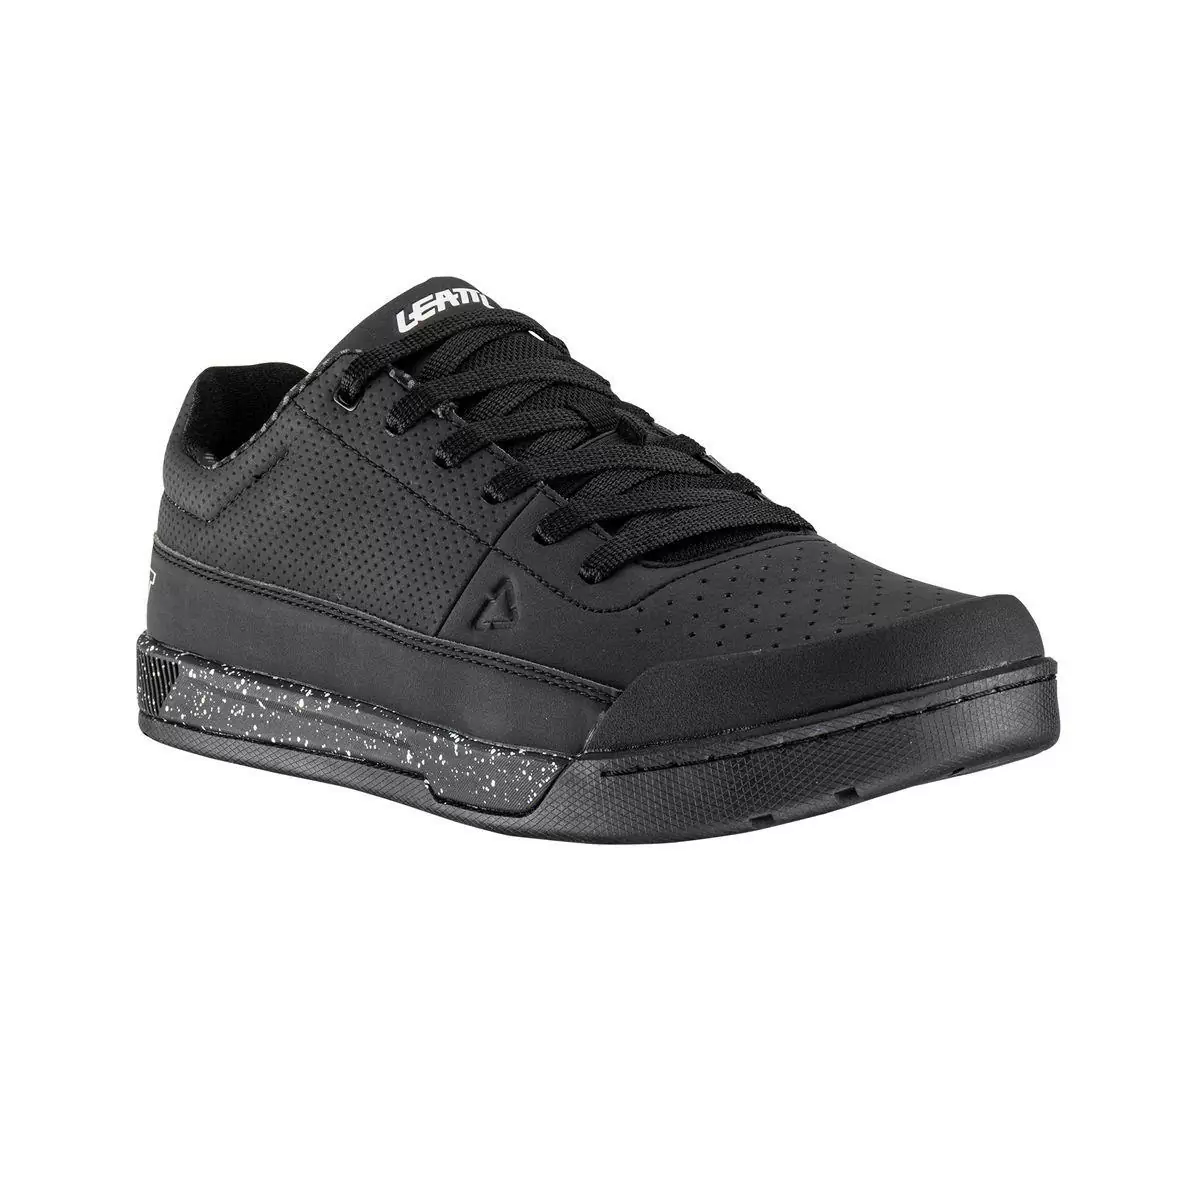 Mtb Shoes 2.0 Flat Black Size 41.5 #1